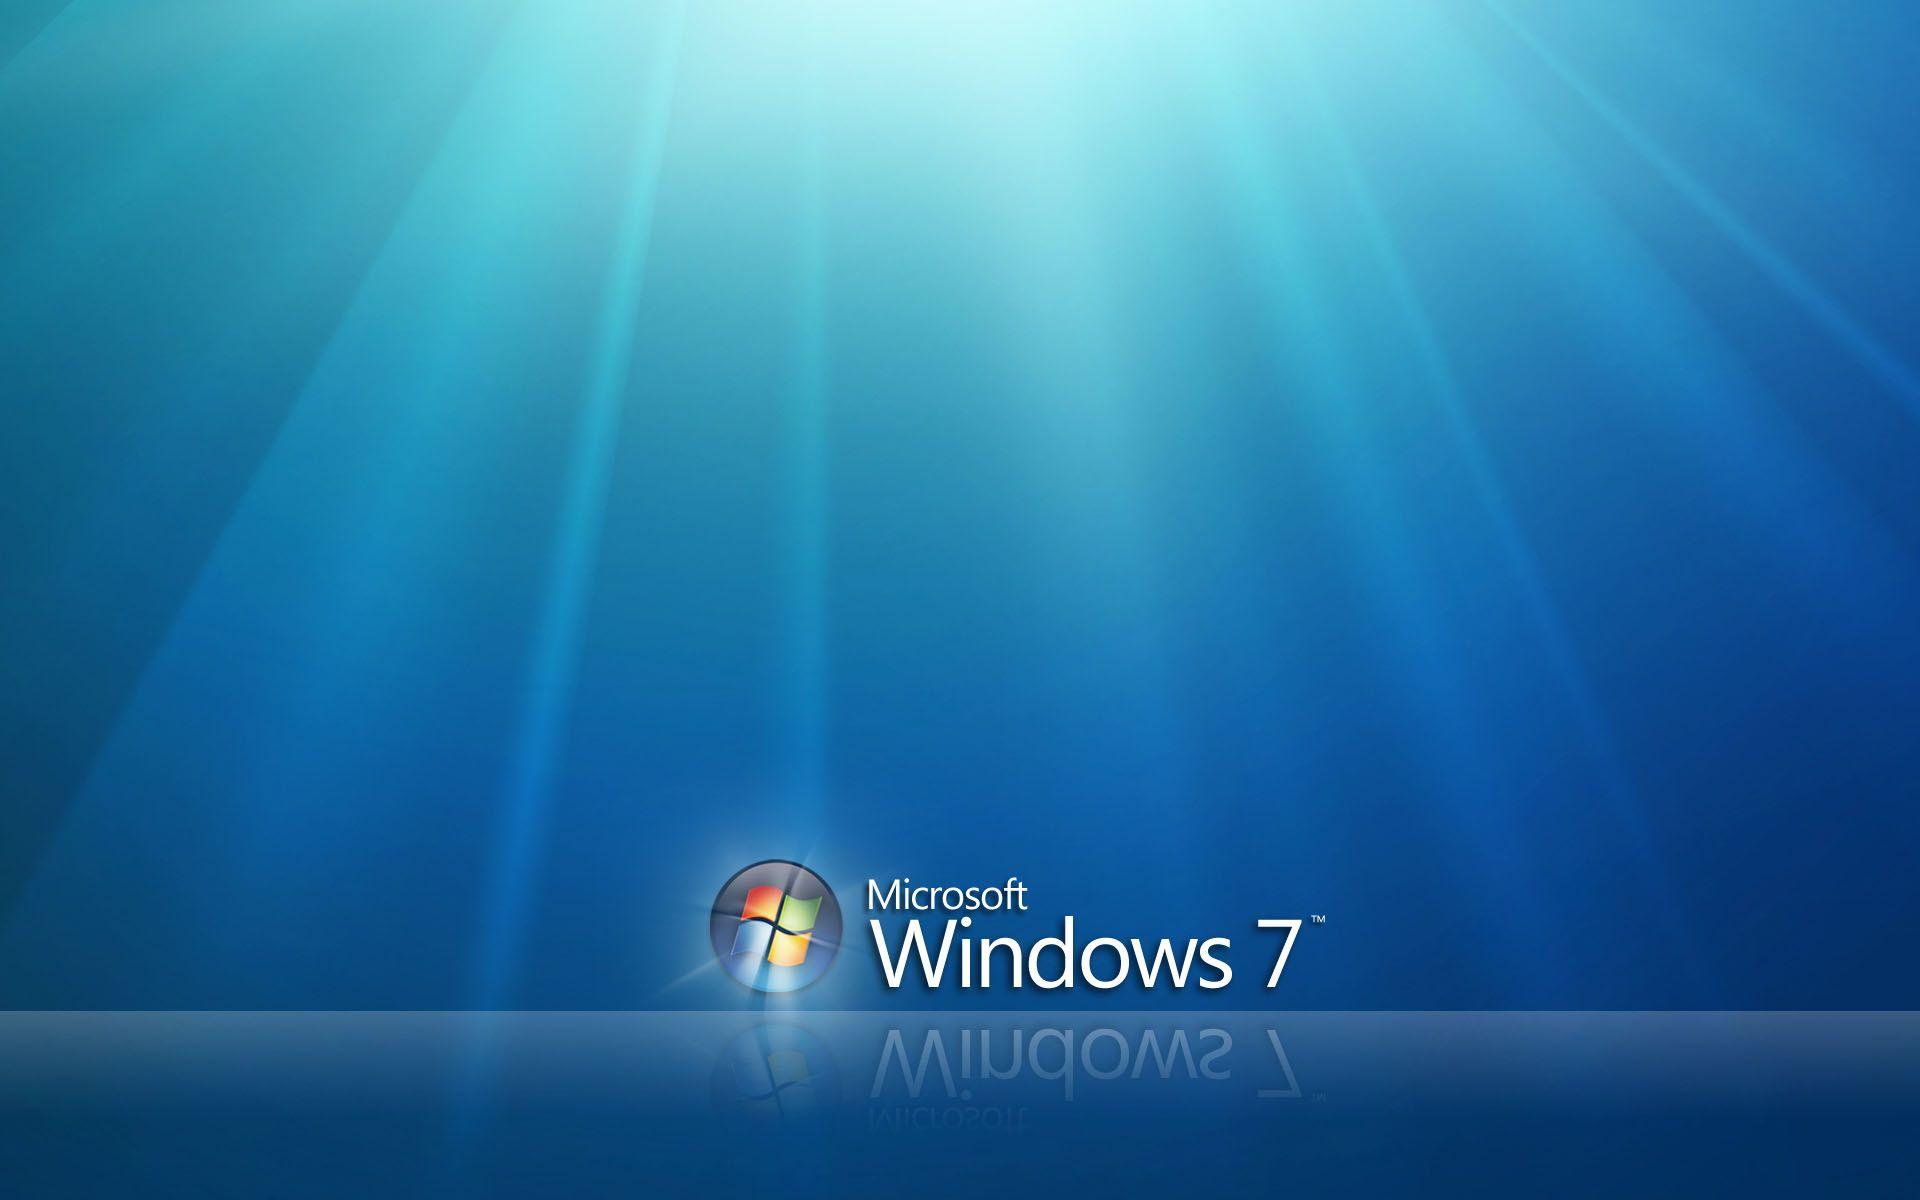 Windows 7 Desktop wallpaper